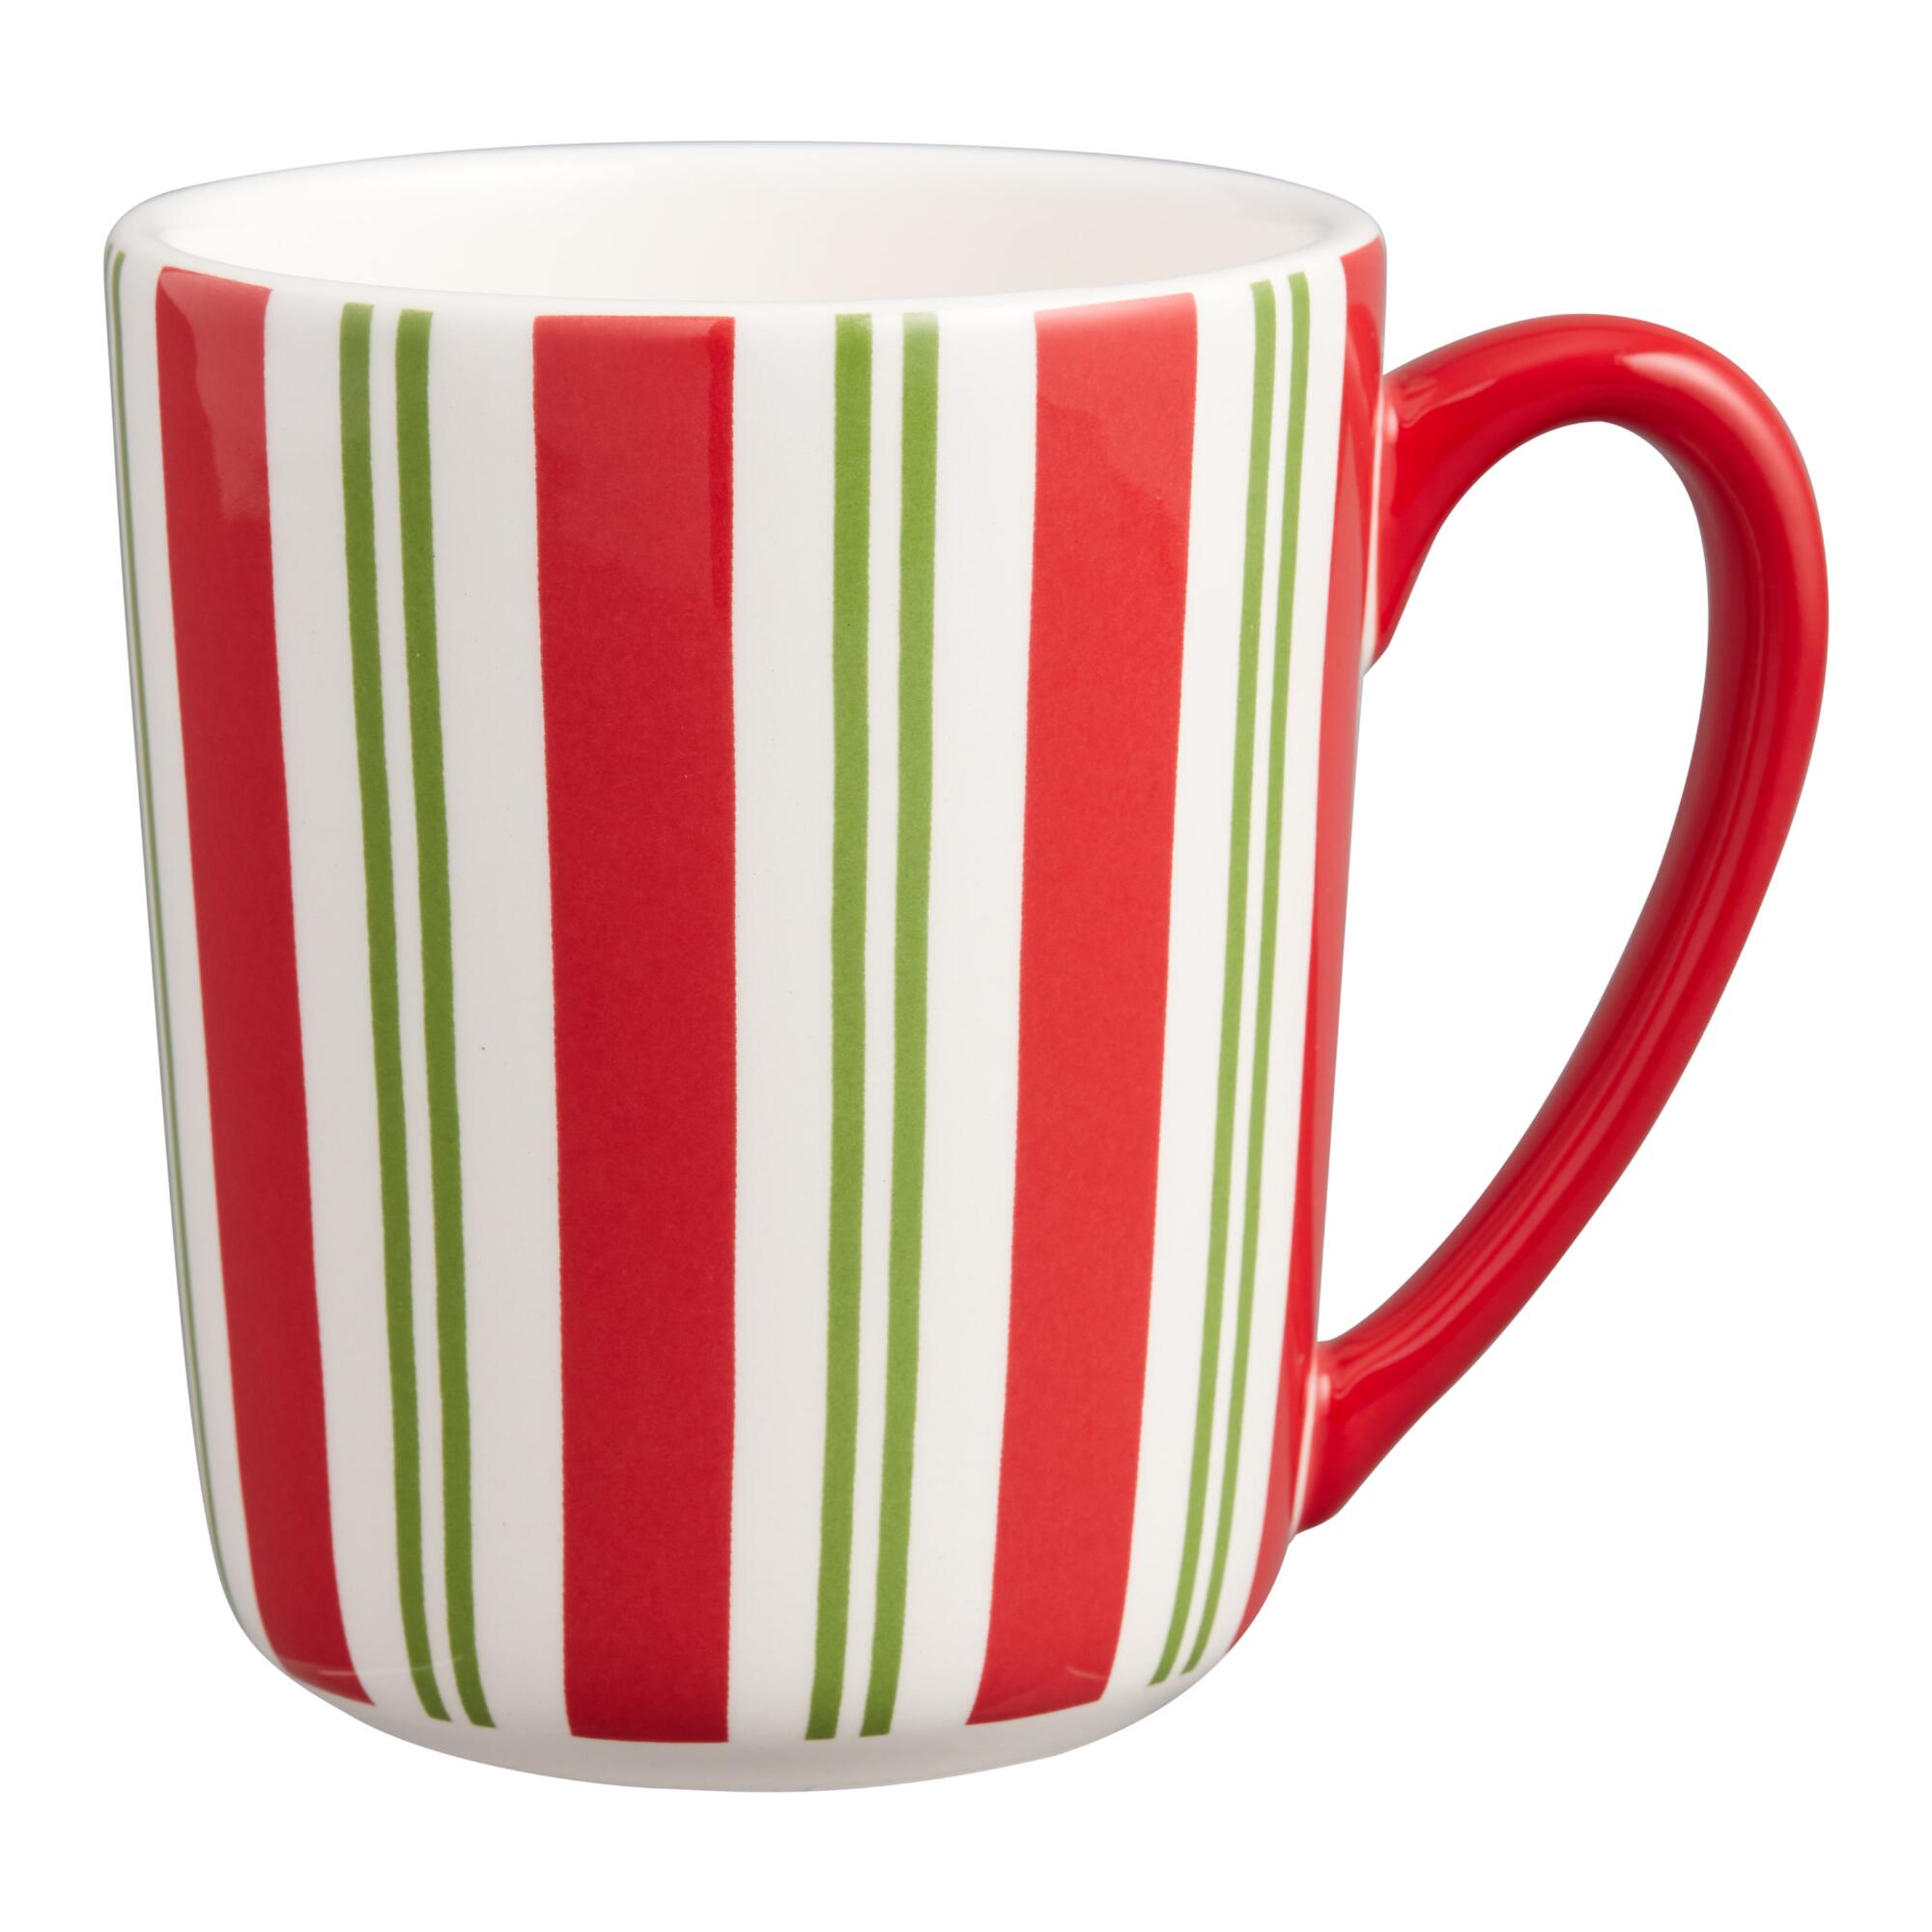 Pier Place Peppermint Stripe Mug: Green/Red/White - Earthenware by World Market